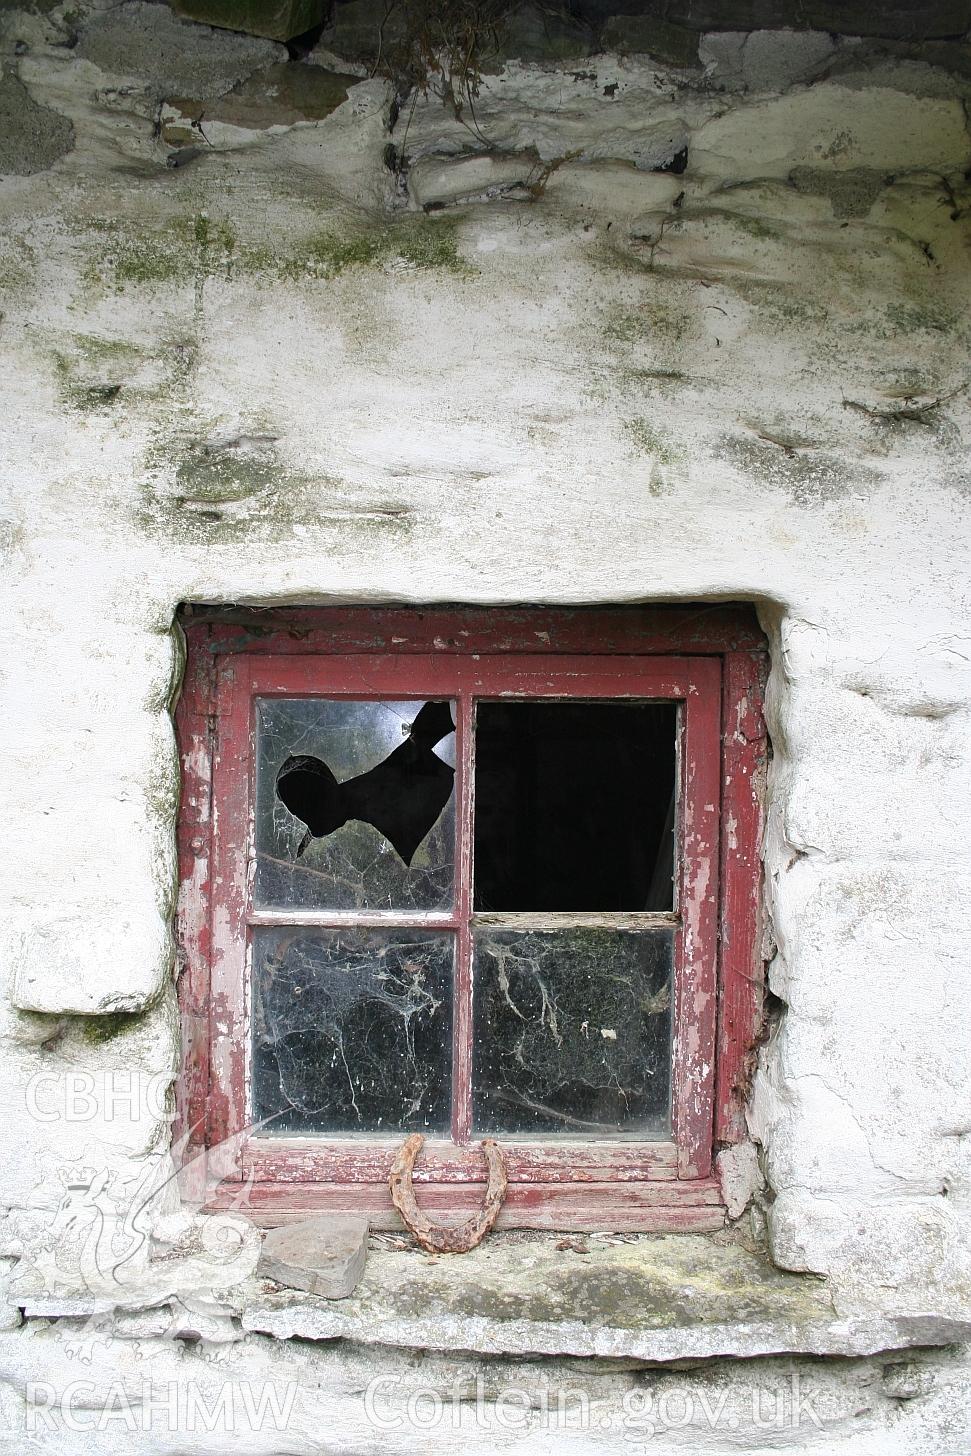 Dwelling end of Allt Ddu farmhouse, external window detail, west wall.